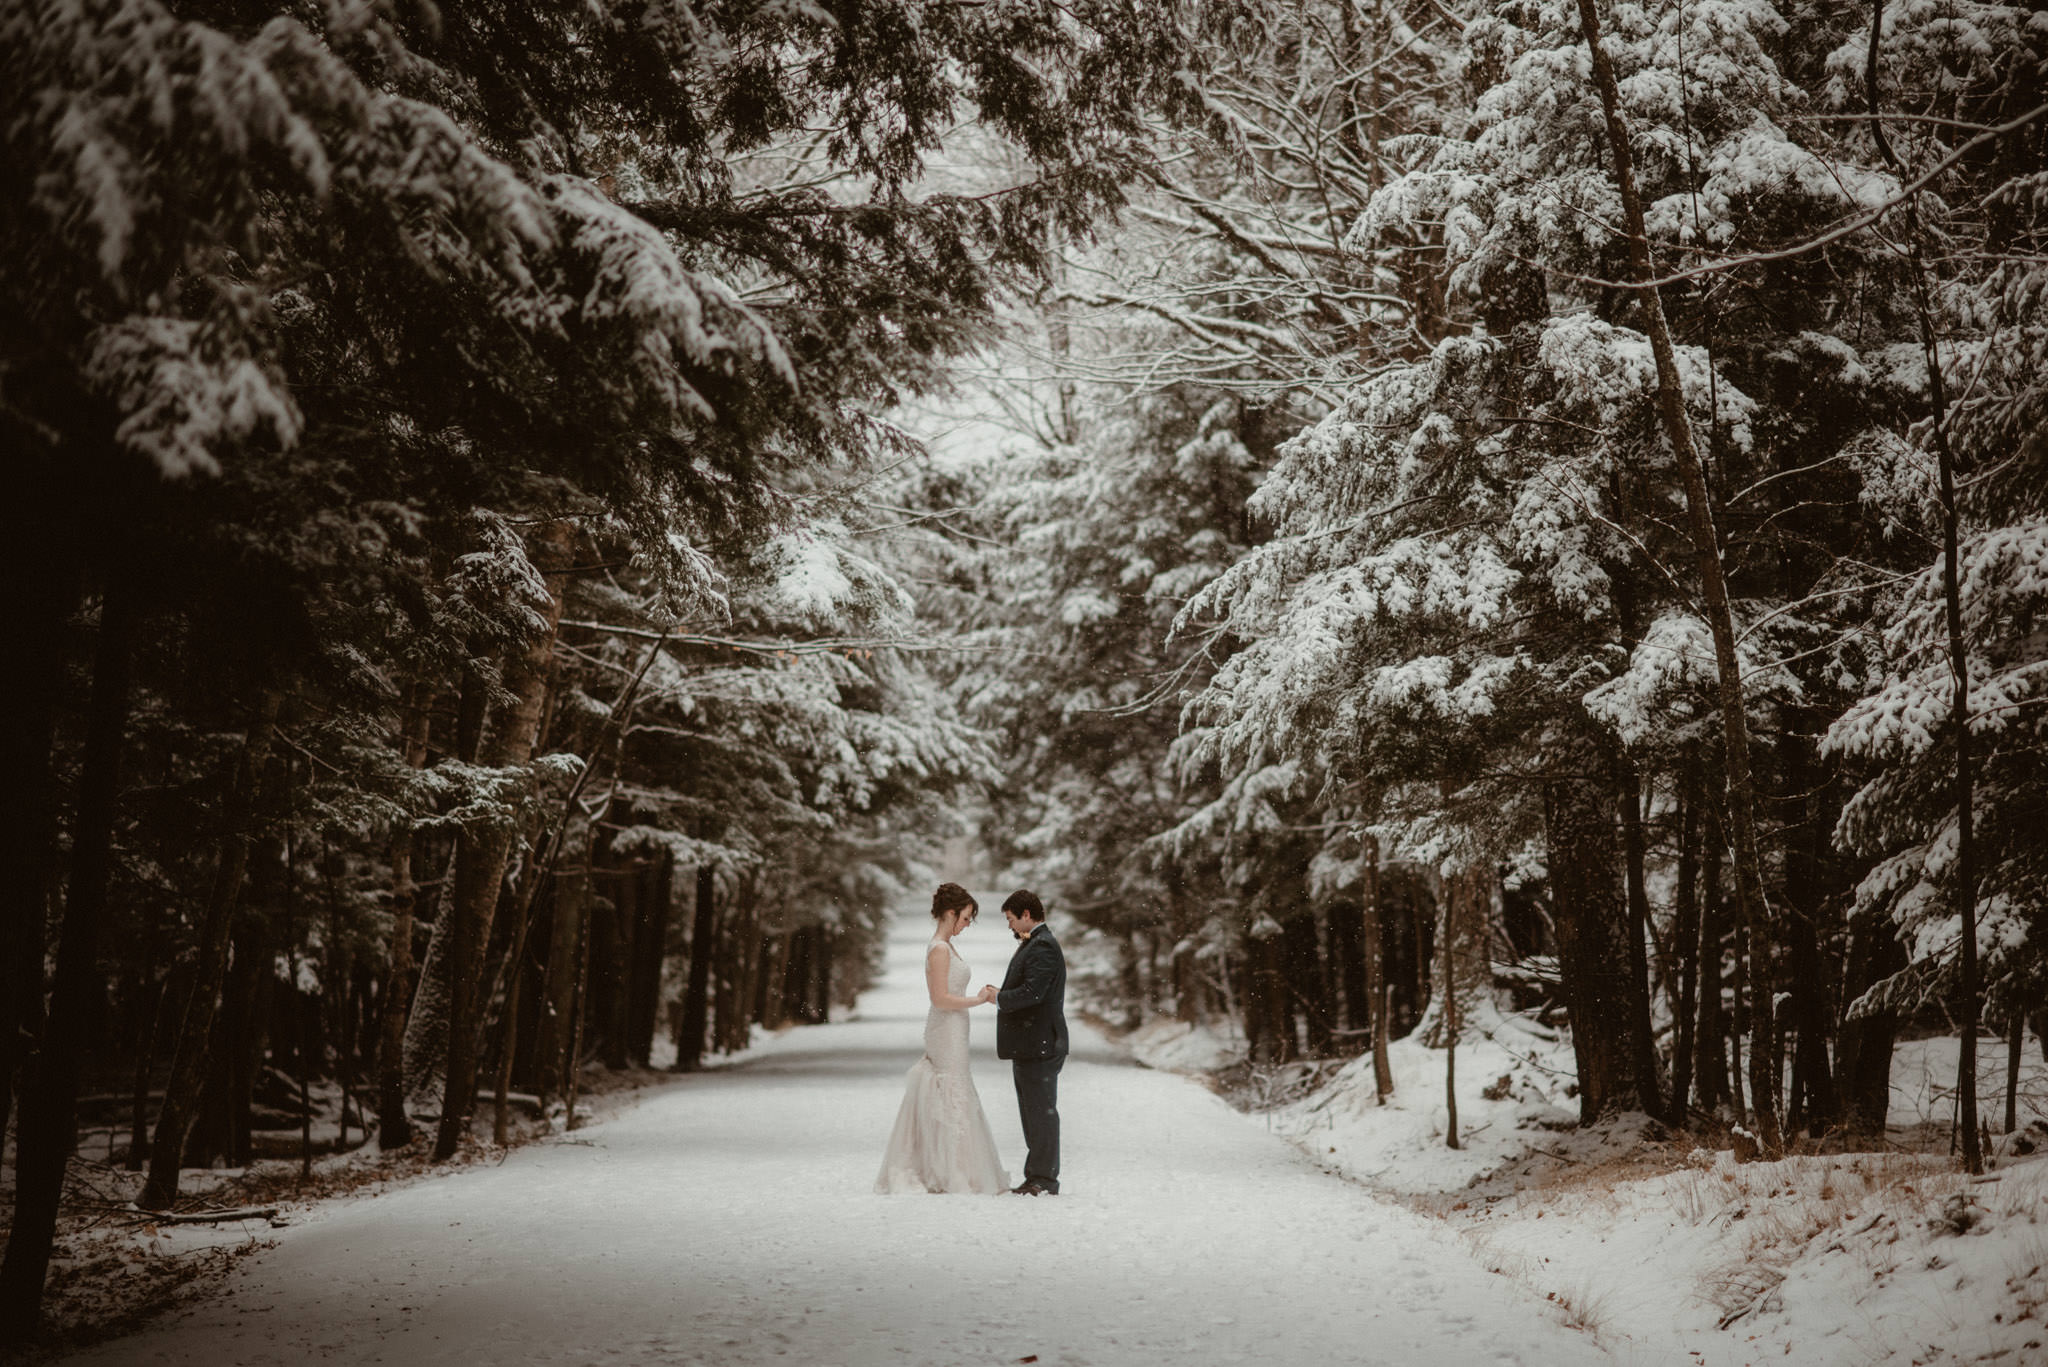 Beautiful snowy elopement in Michigan's Upper Peninsula